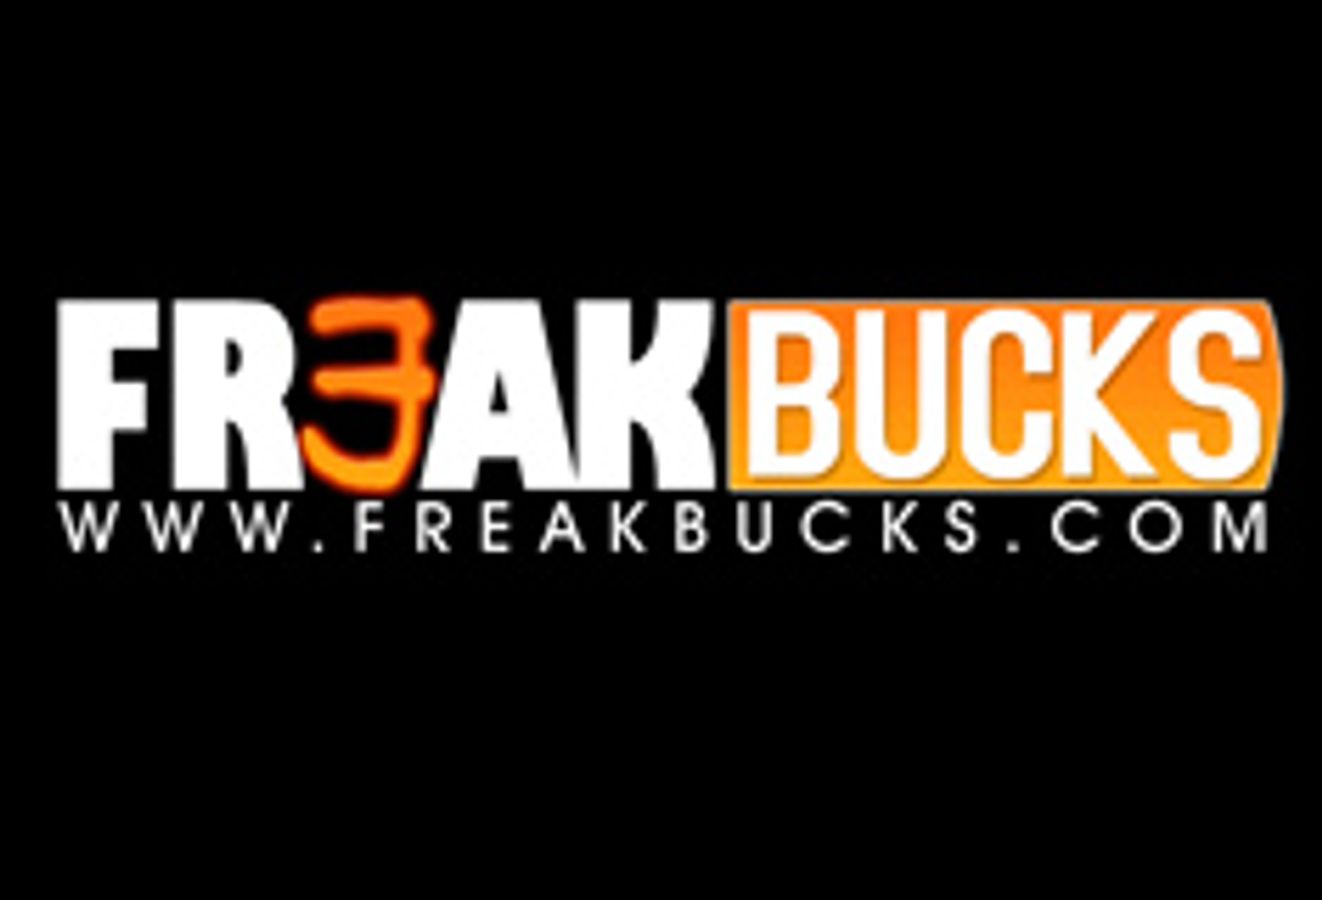 FreakBucks